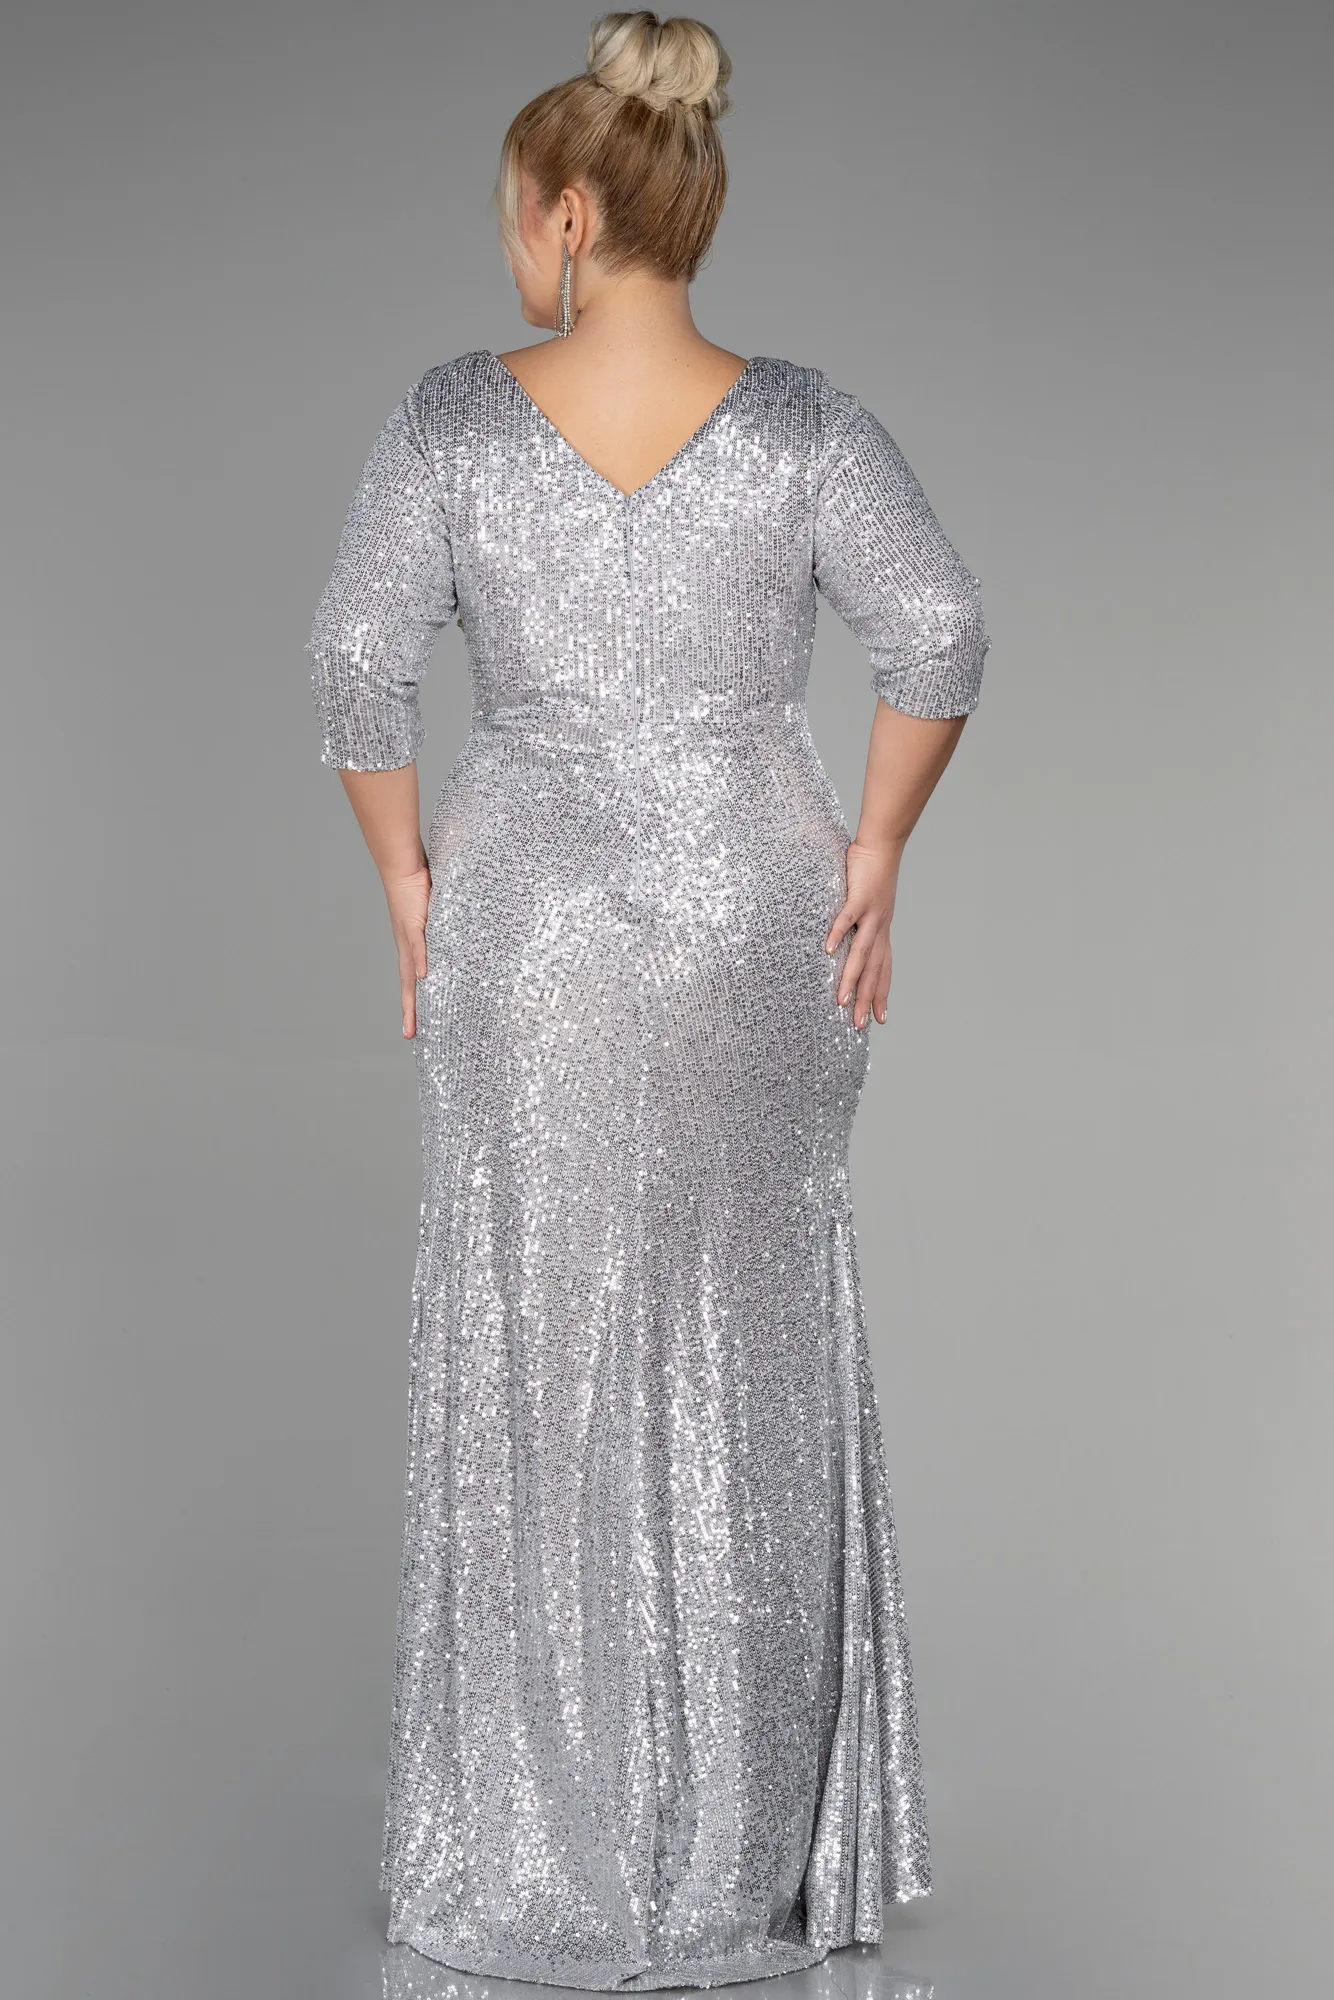 Silver-Long Scaly Plus Size Evening Dress ABU3258